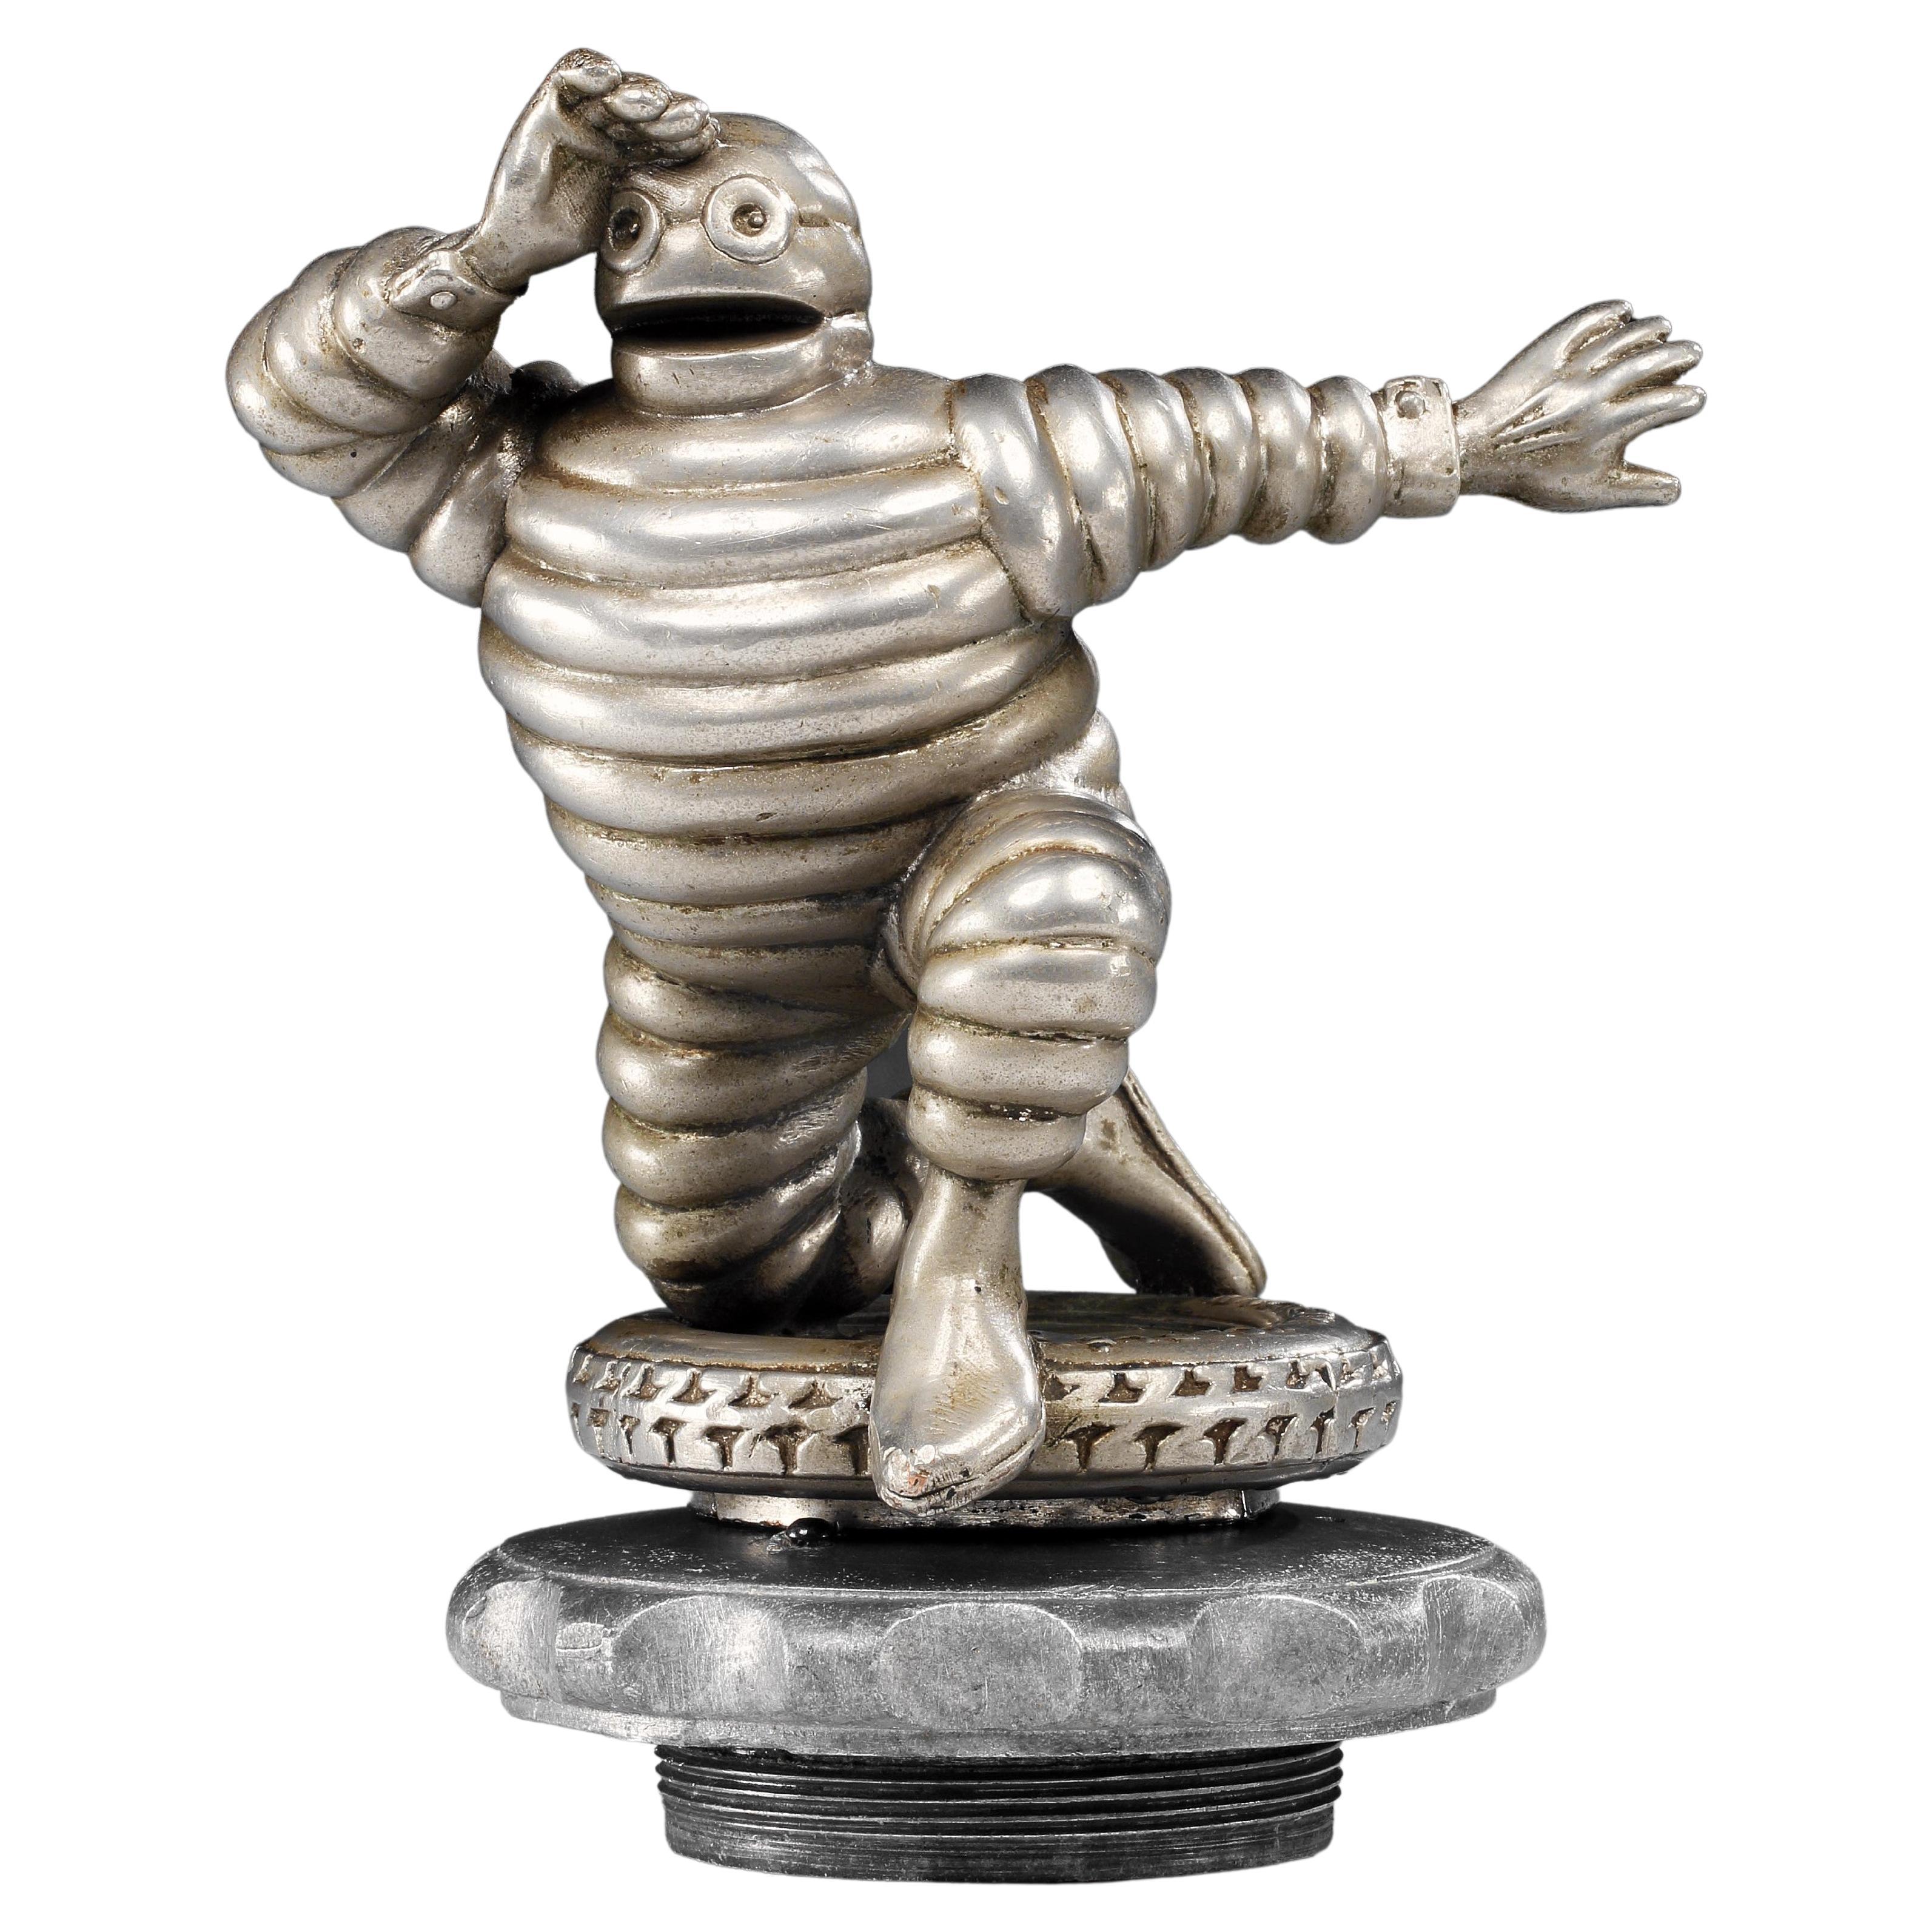 Rare Silvered Bronze ‘Monsieur Bibendum’, or Michelin Man Car Mascot, from 1916